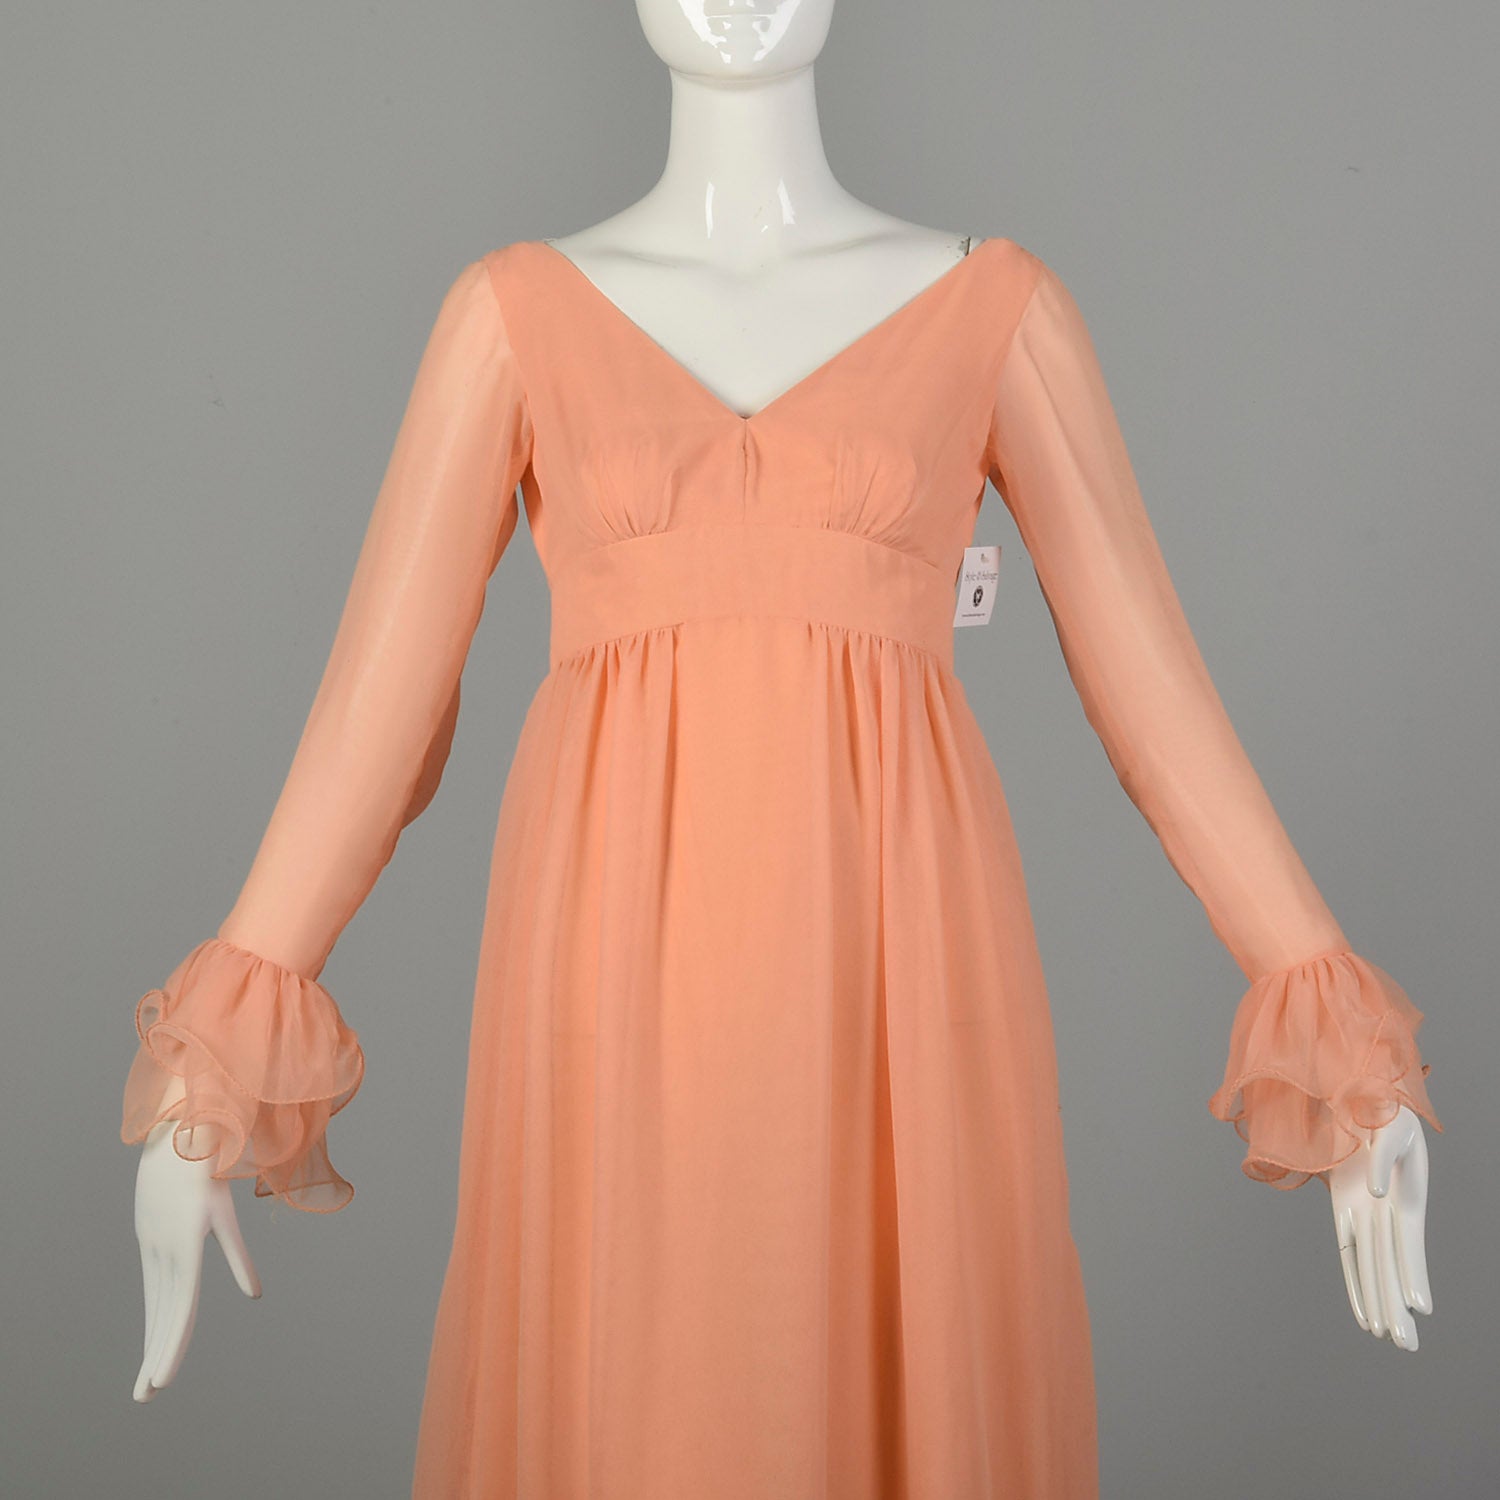 LOVELY VTG 1960s EVENING DRESS VOGUE Sewing Pattern 12/34 | eBay